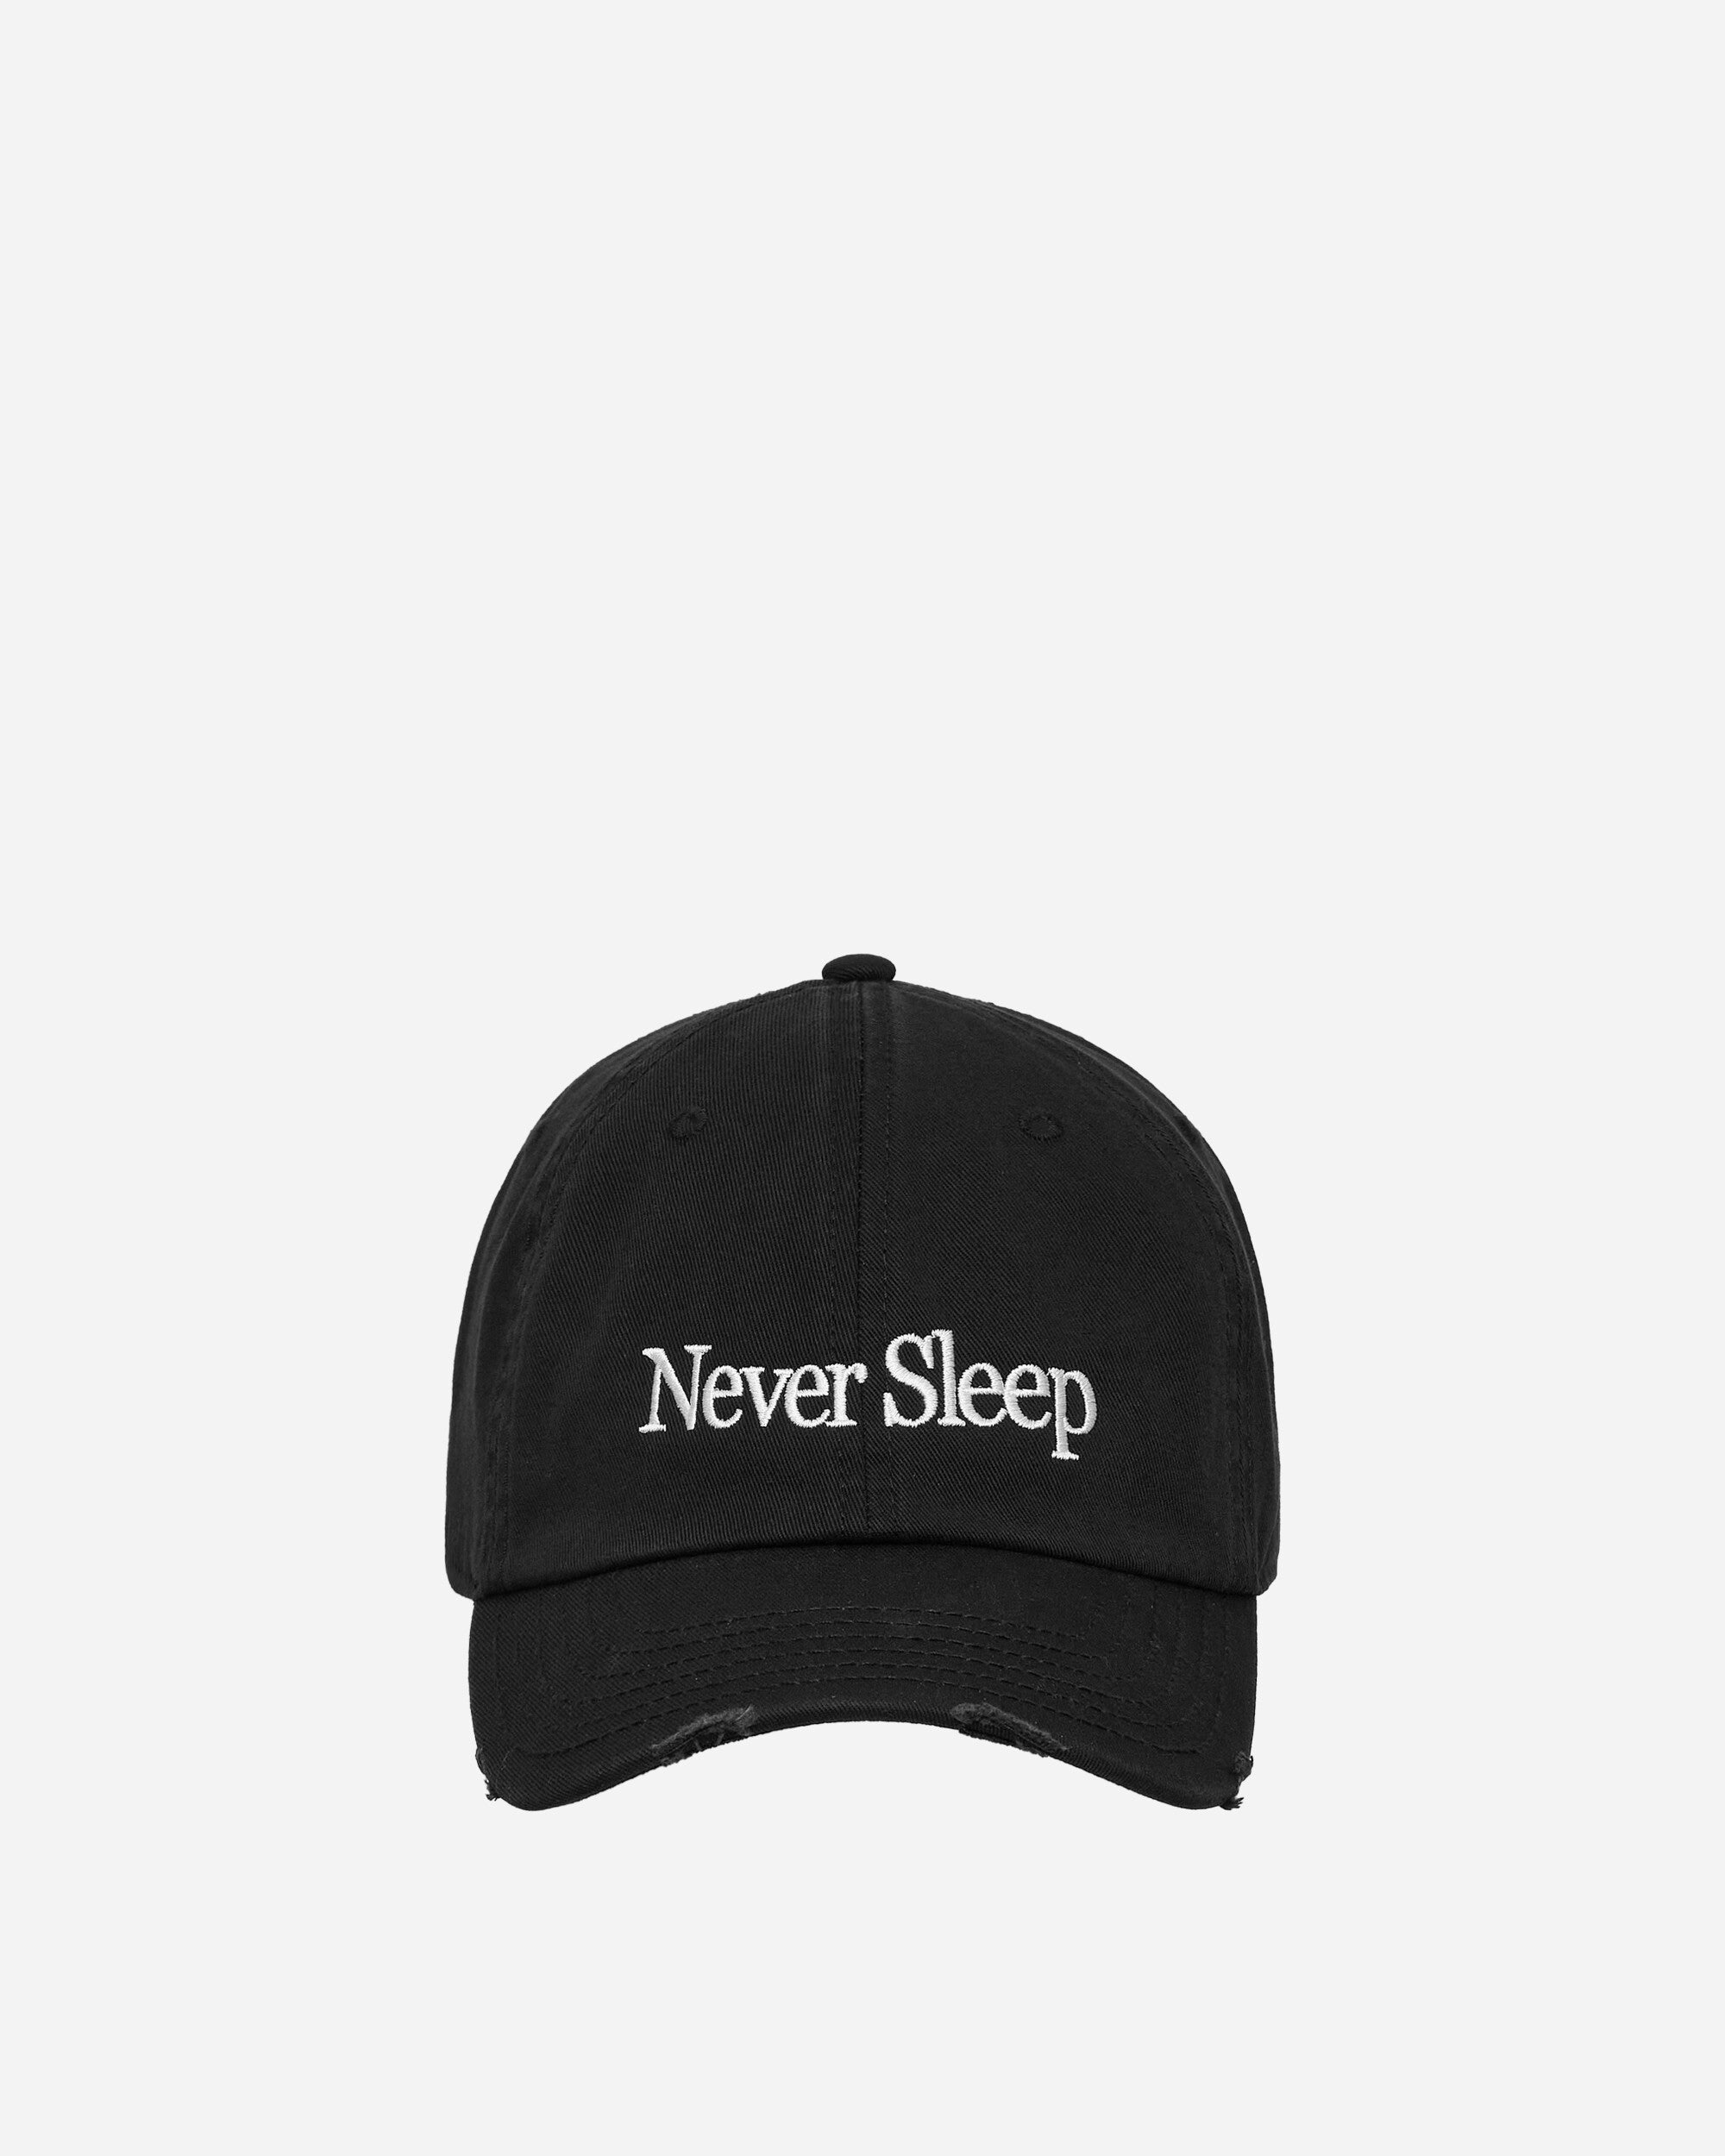 Never Sleep Never Sleep Crew Cap Light Grey Hats Caps NSCRWCAP 6